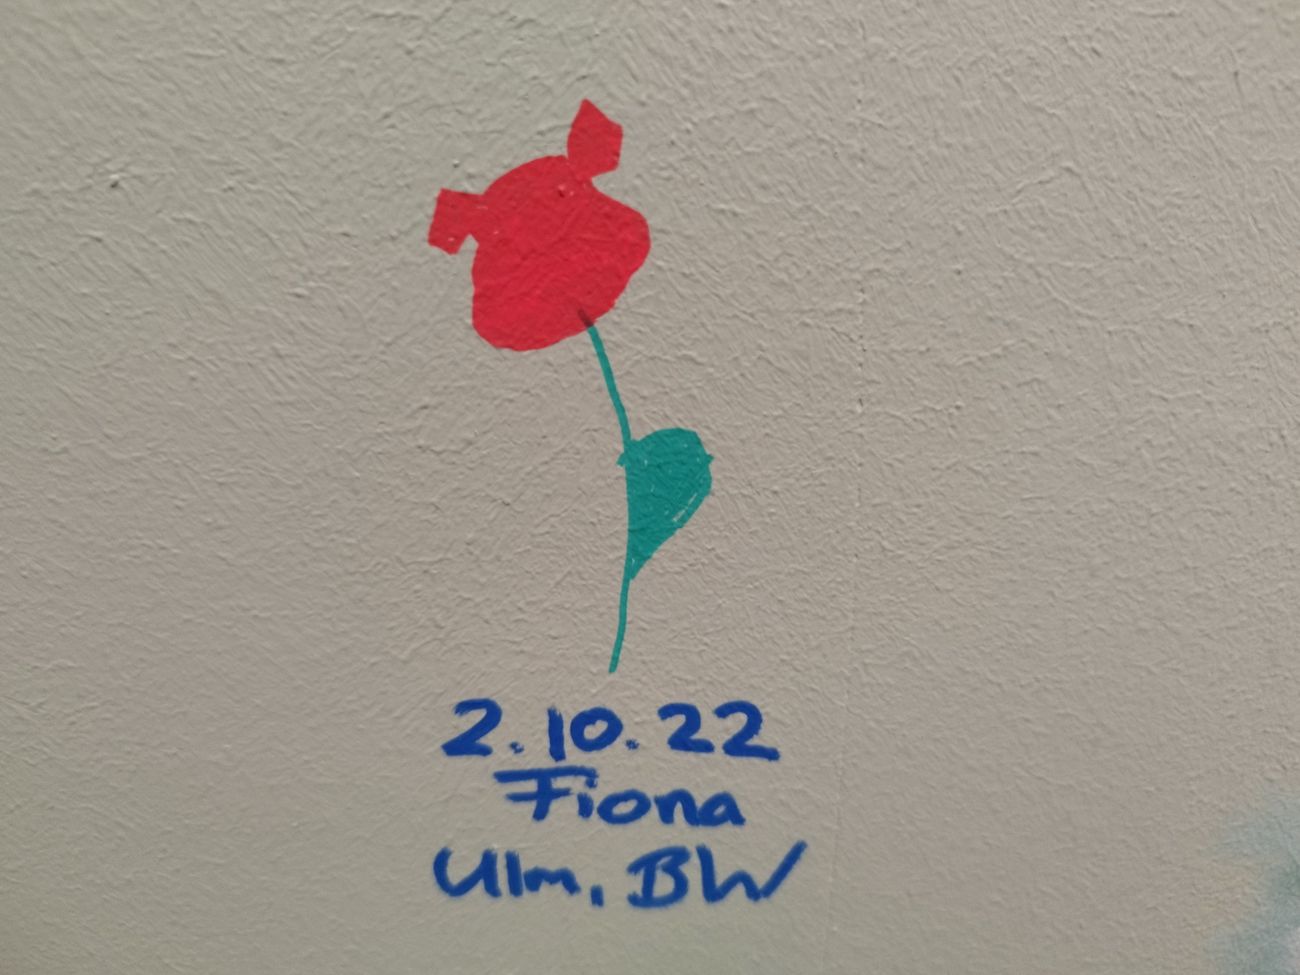 Blume saustark - umdieWurst.de